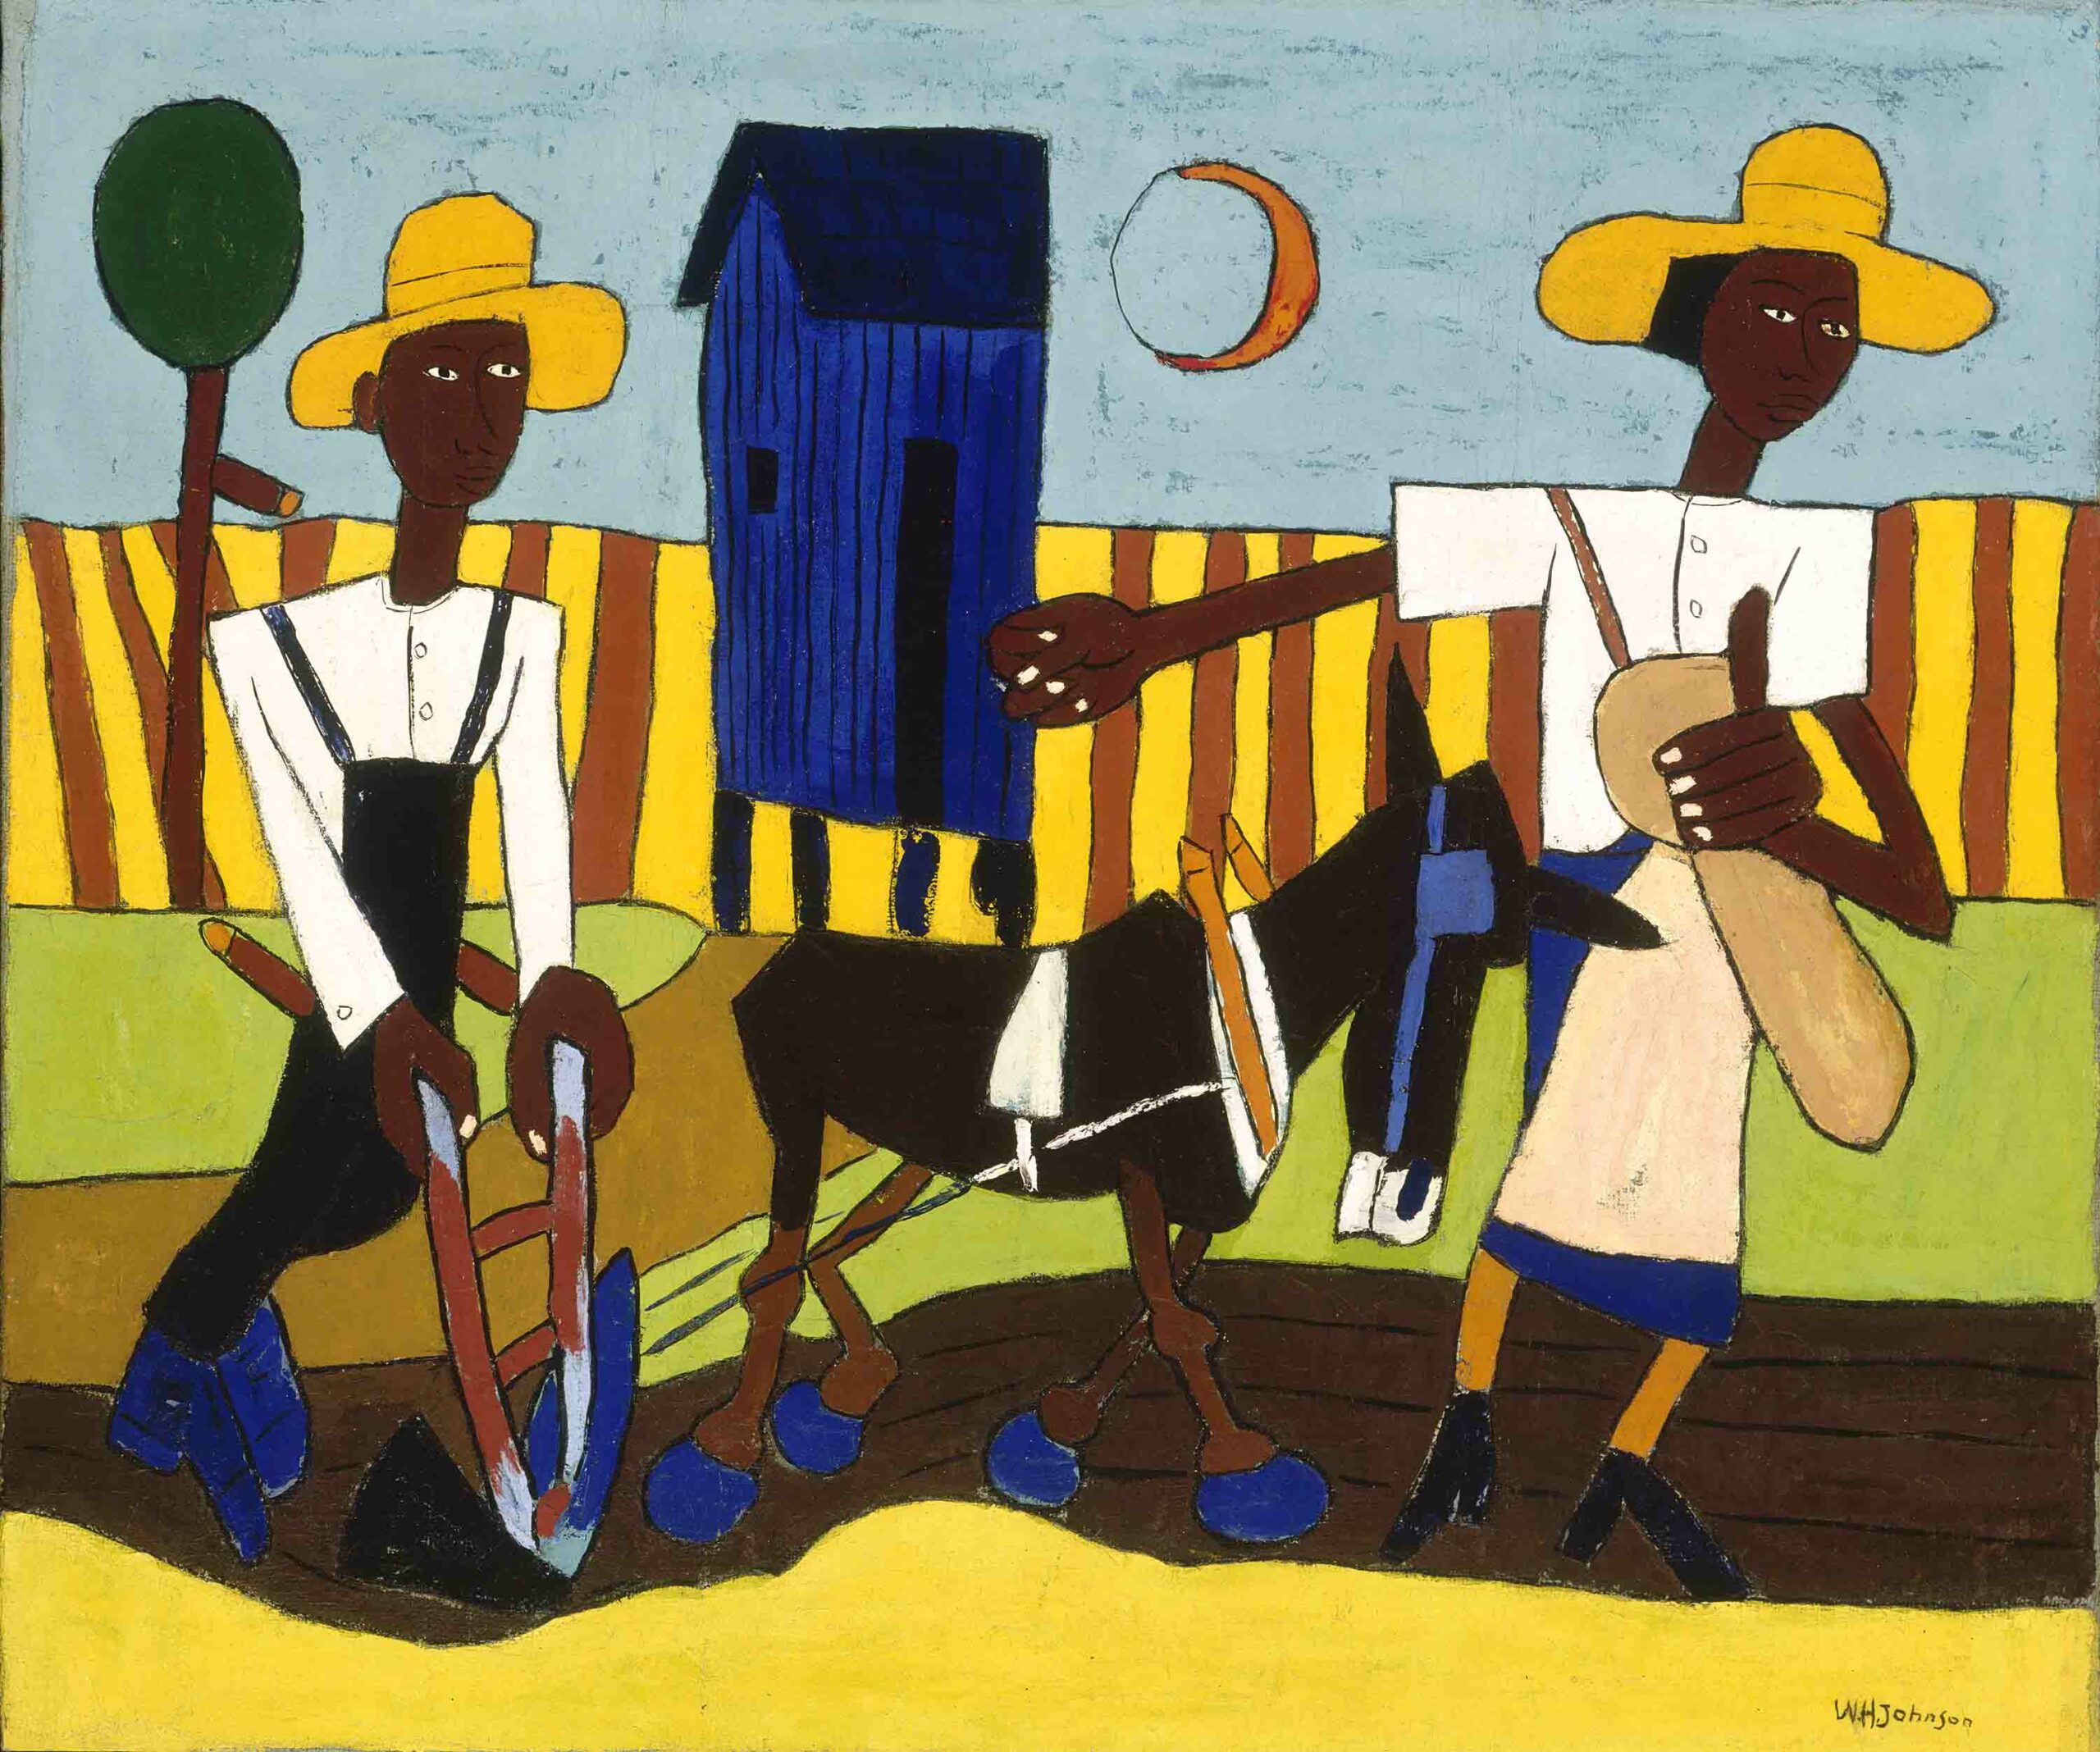 African American Art in the 20th Century Harlem Renaissance, Civil